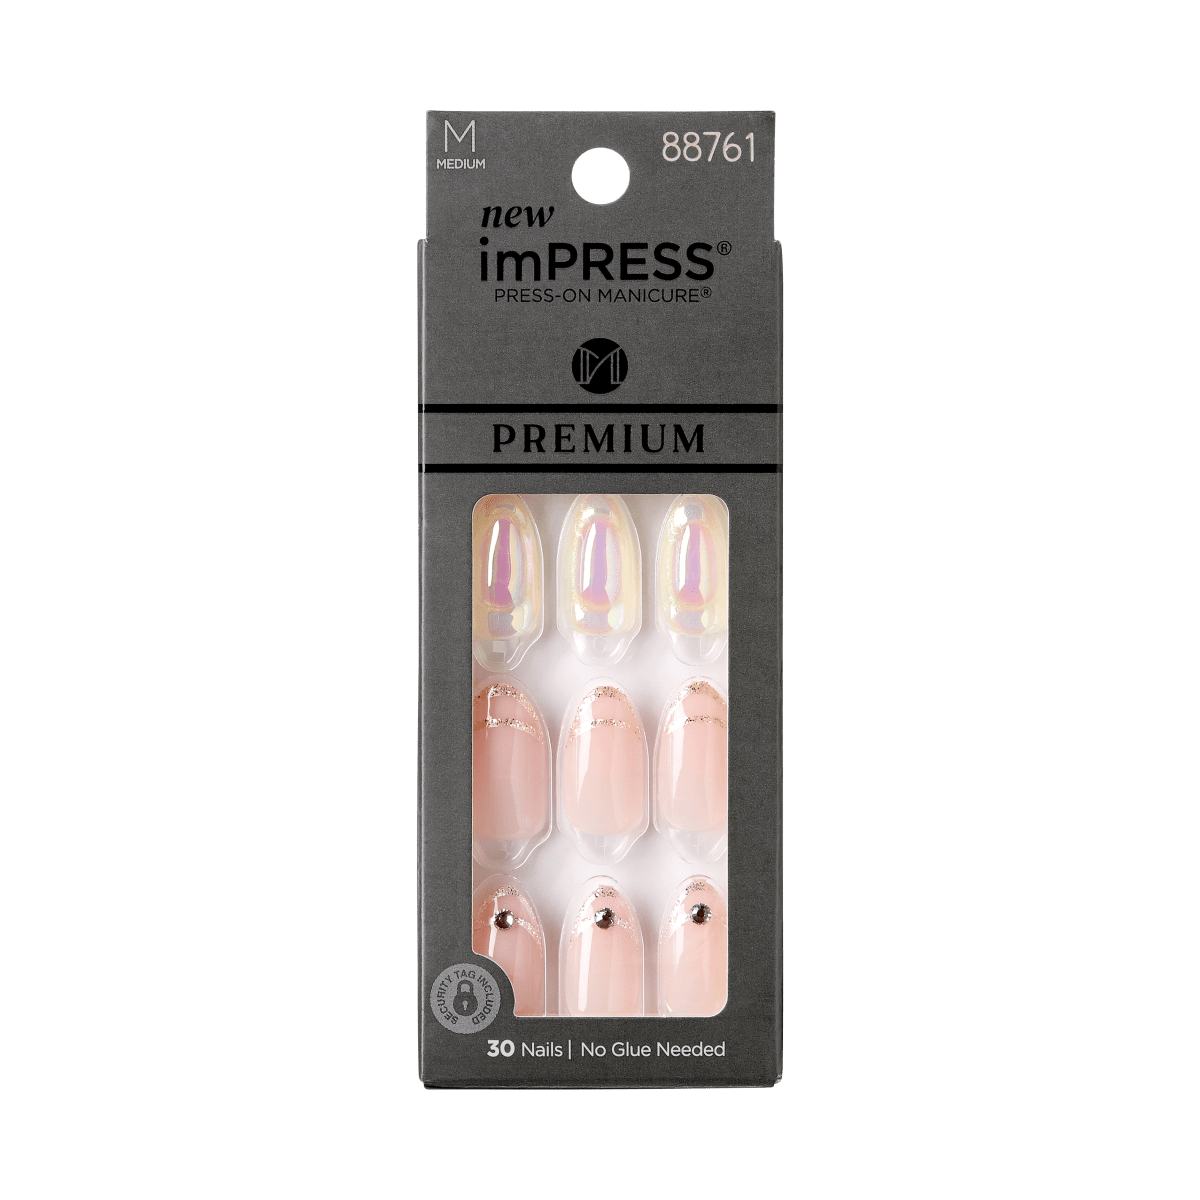 imPRESS Premium Press-On Manicure - All My Love